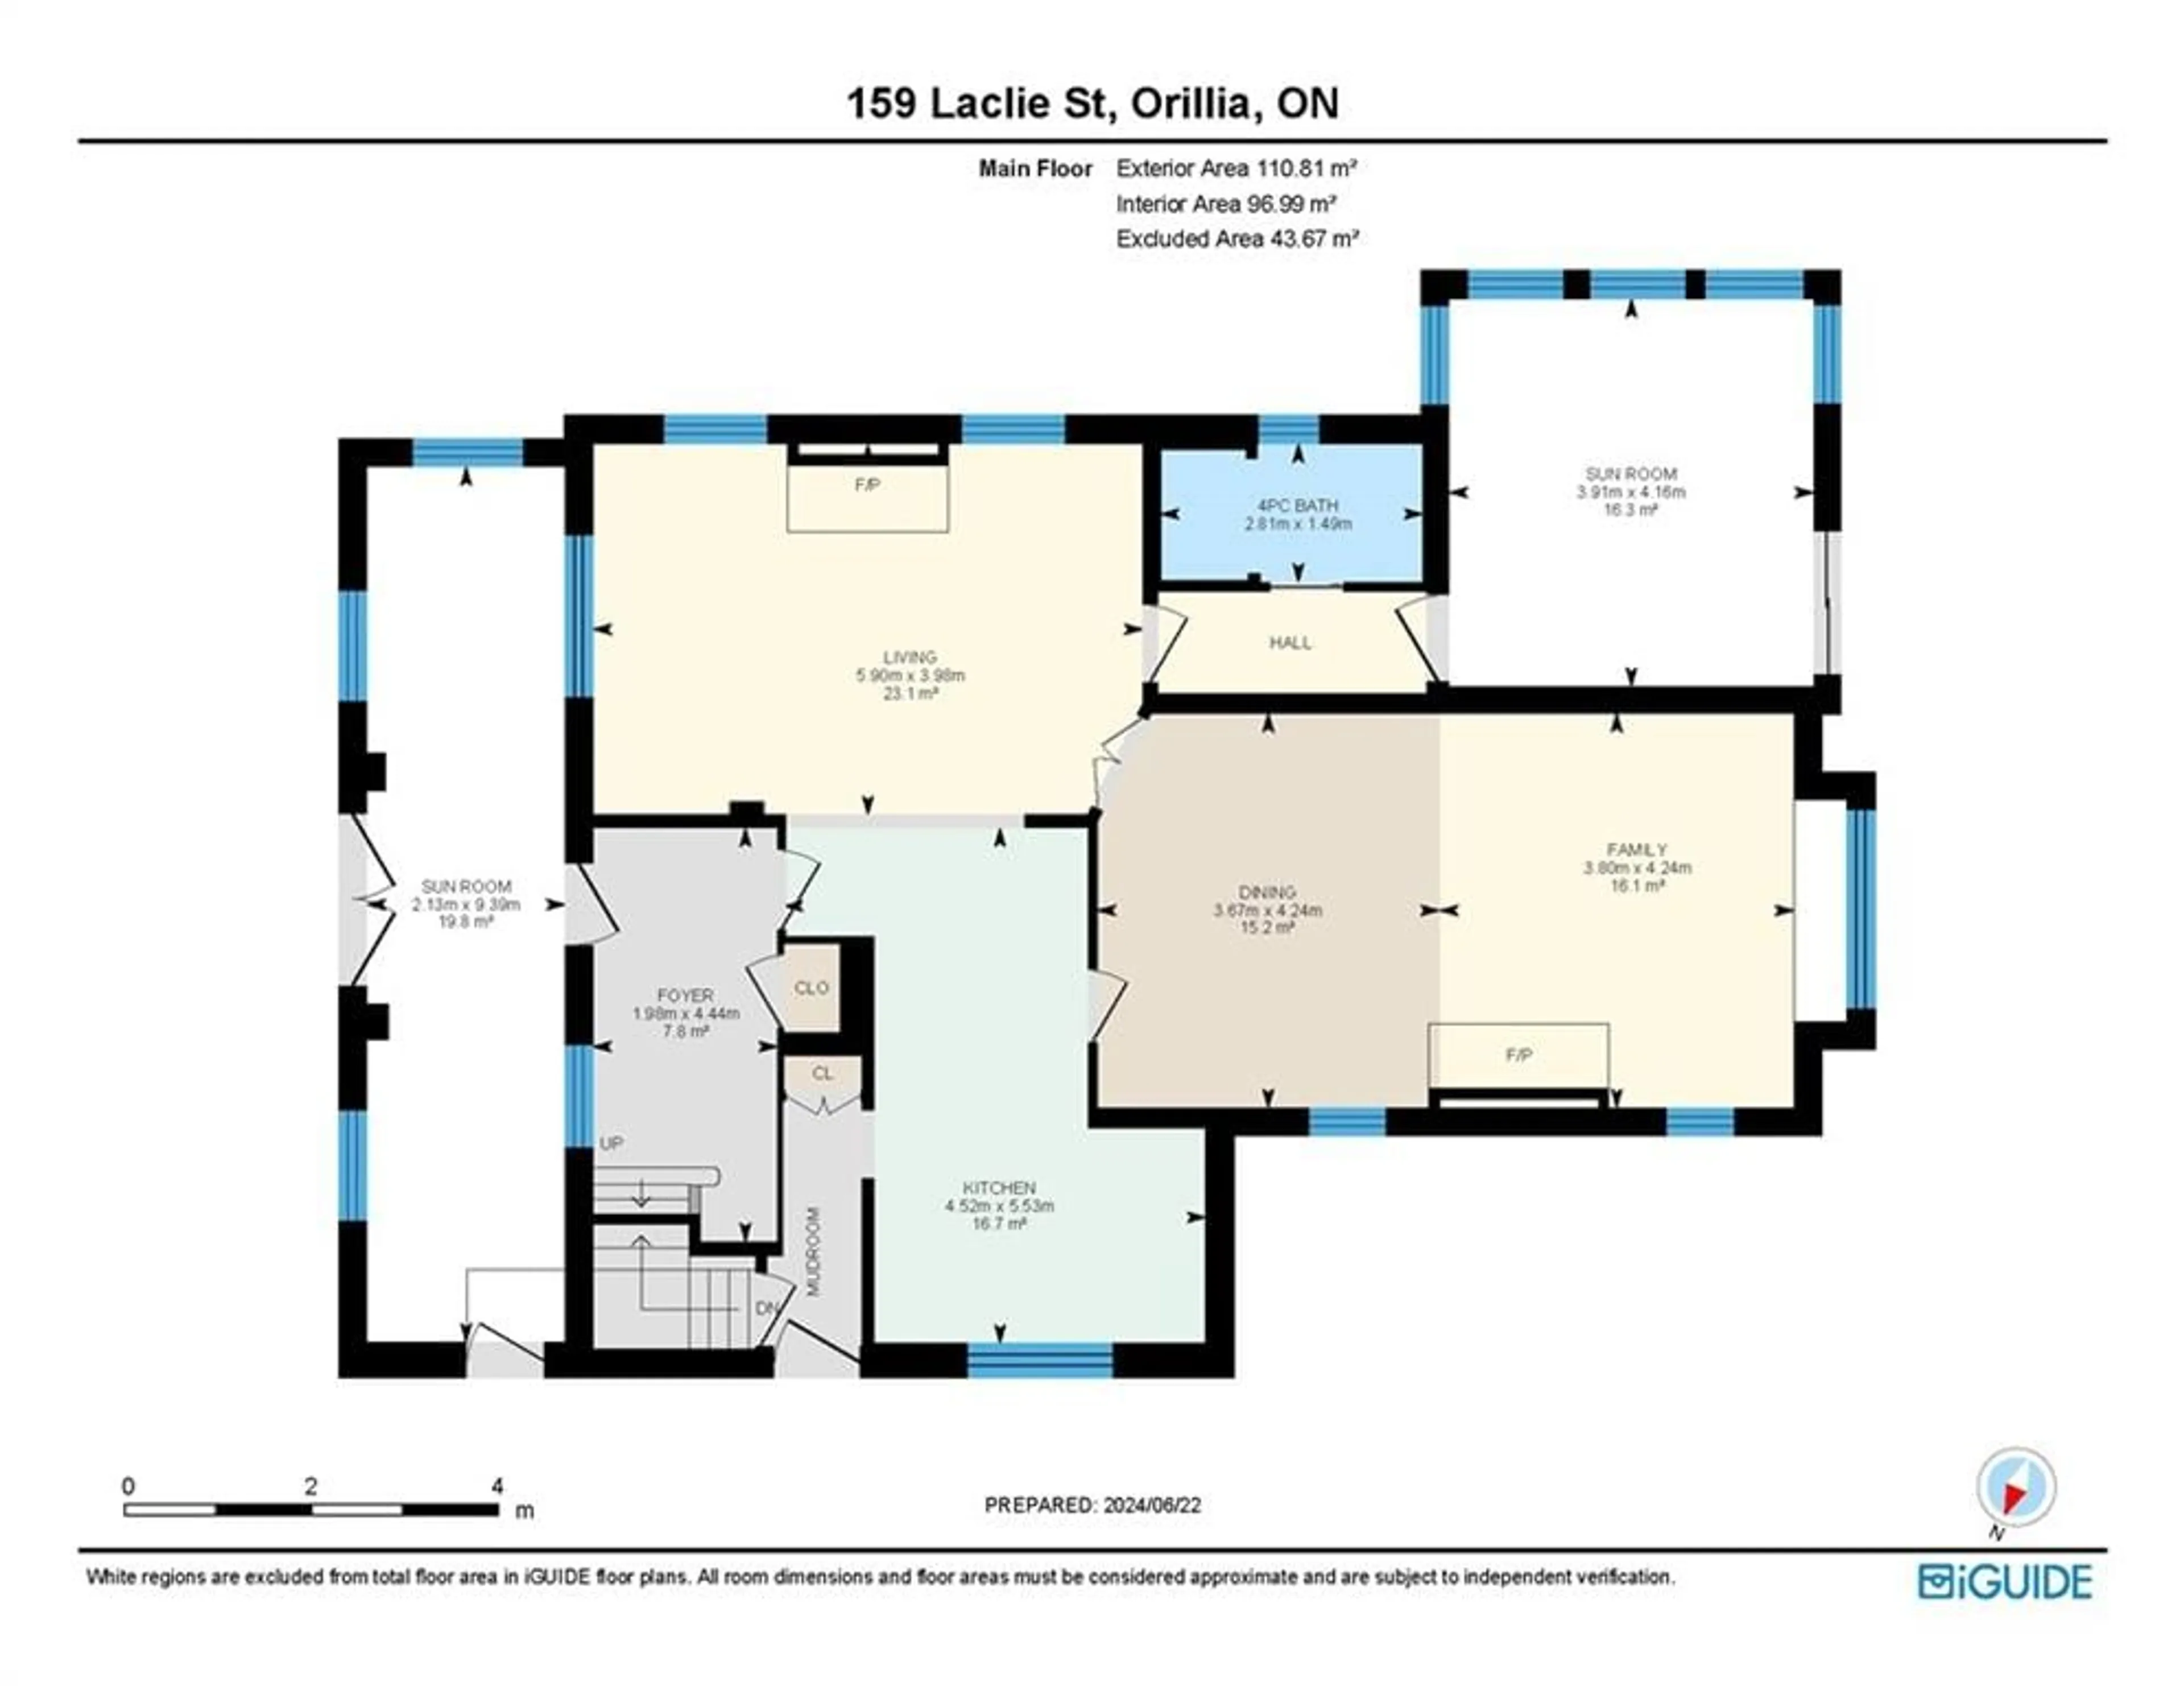 Floor plan for 159 Laclie St, Orillia Ontario L3V 4N1